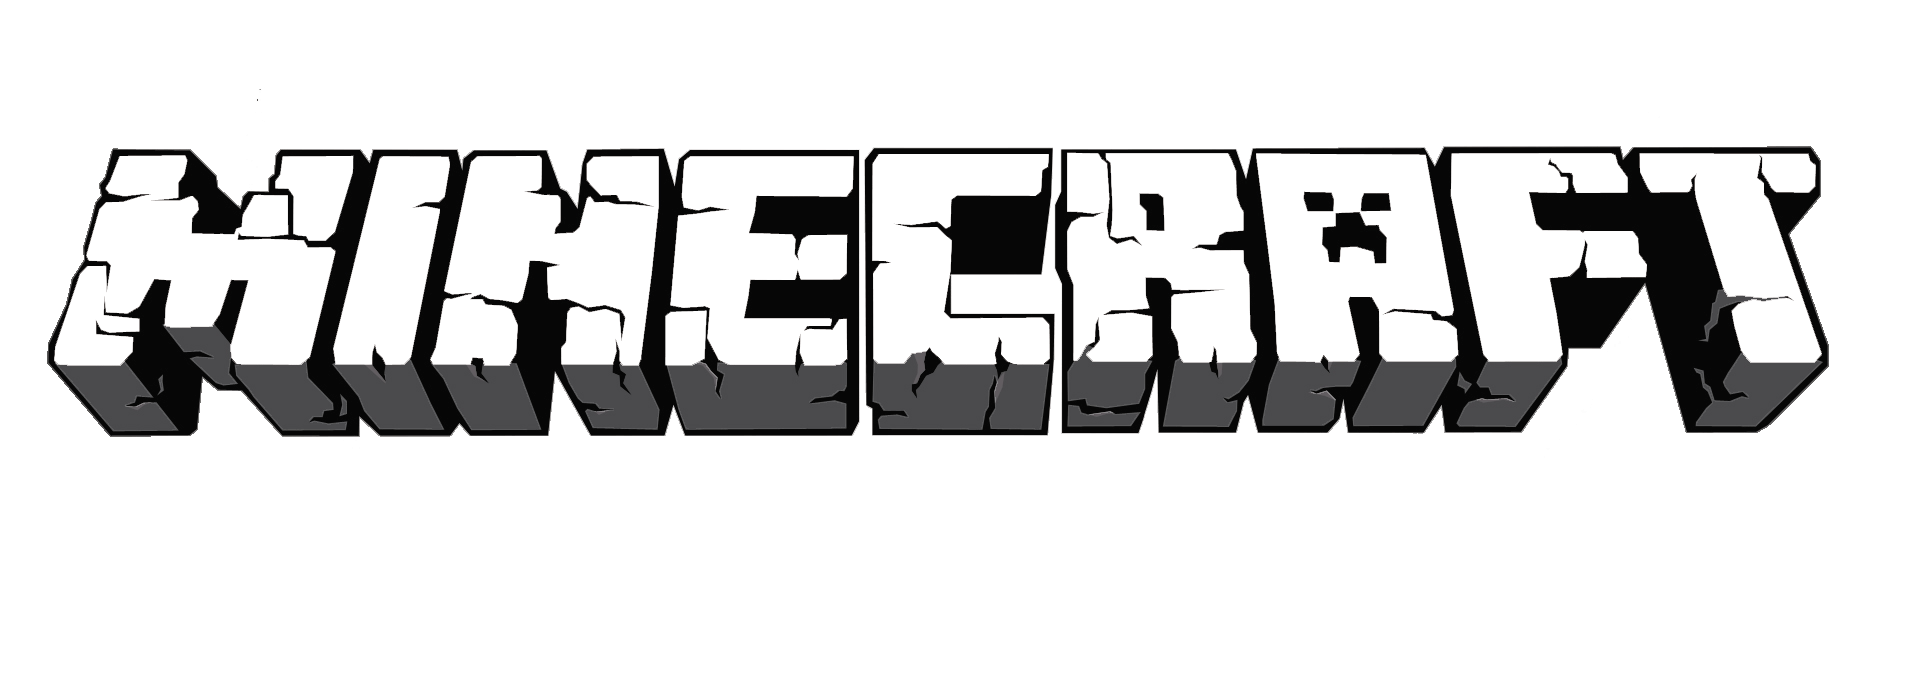 Minecraft clipart logo pc, Minecraft logo pc Transparent FREE for